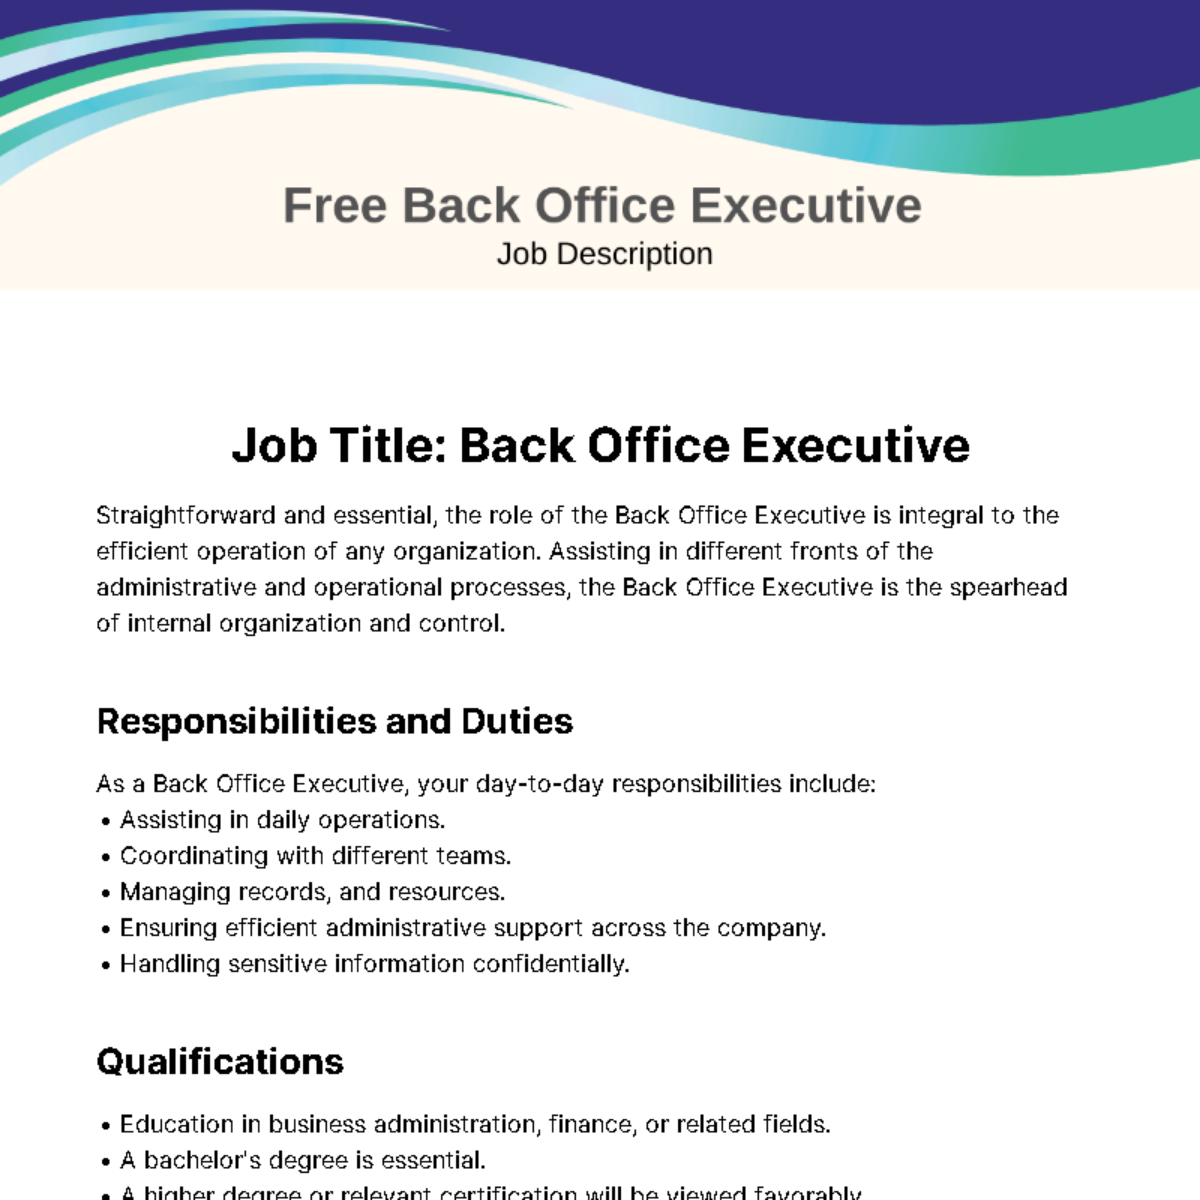 Free Back Office Executive Job Description Template